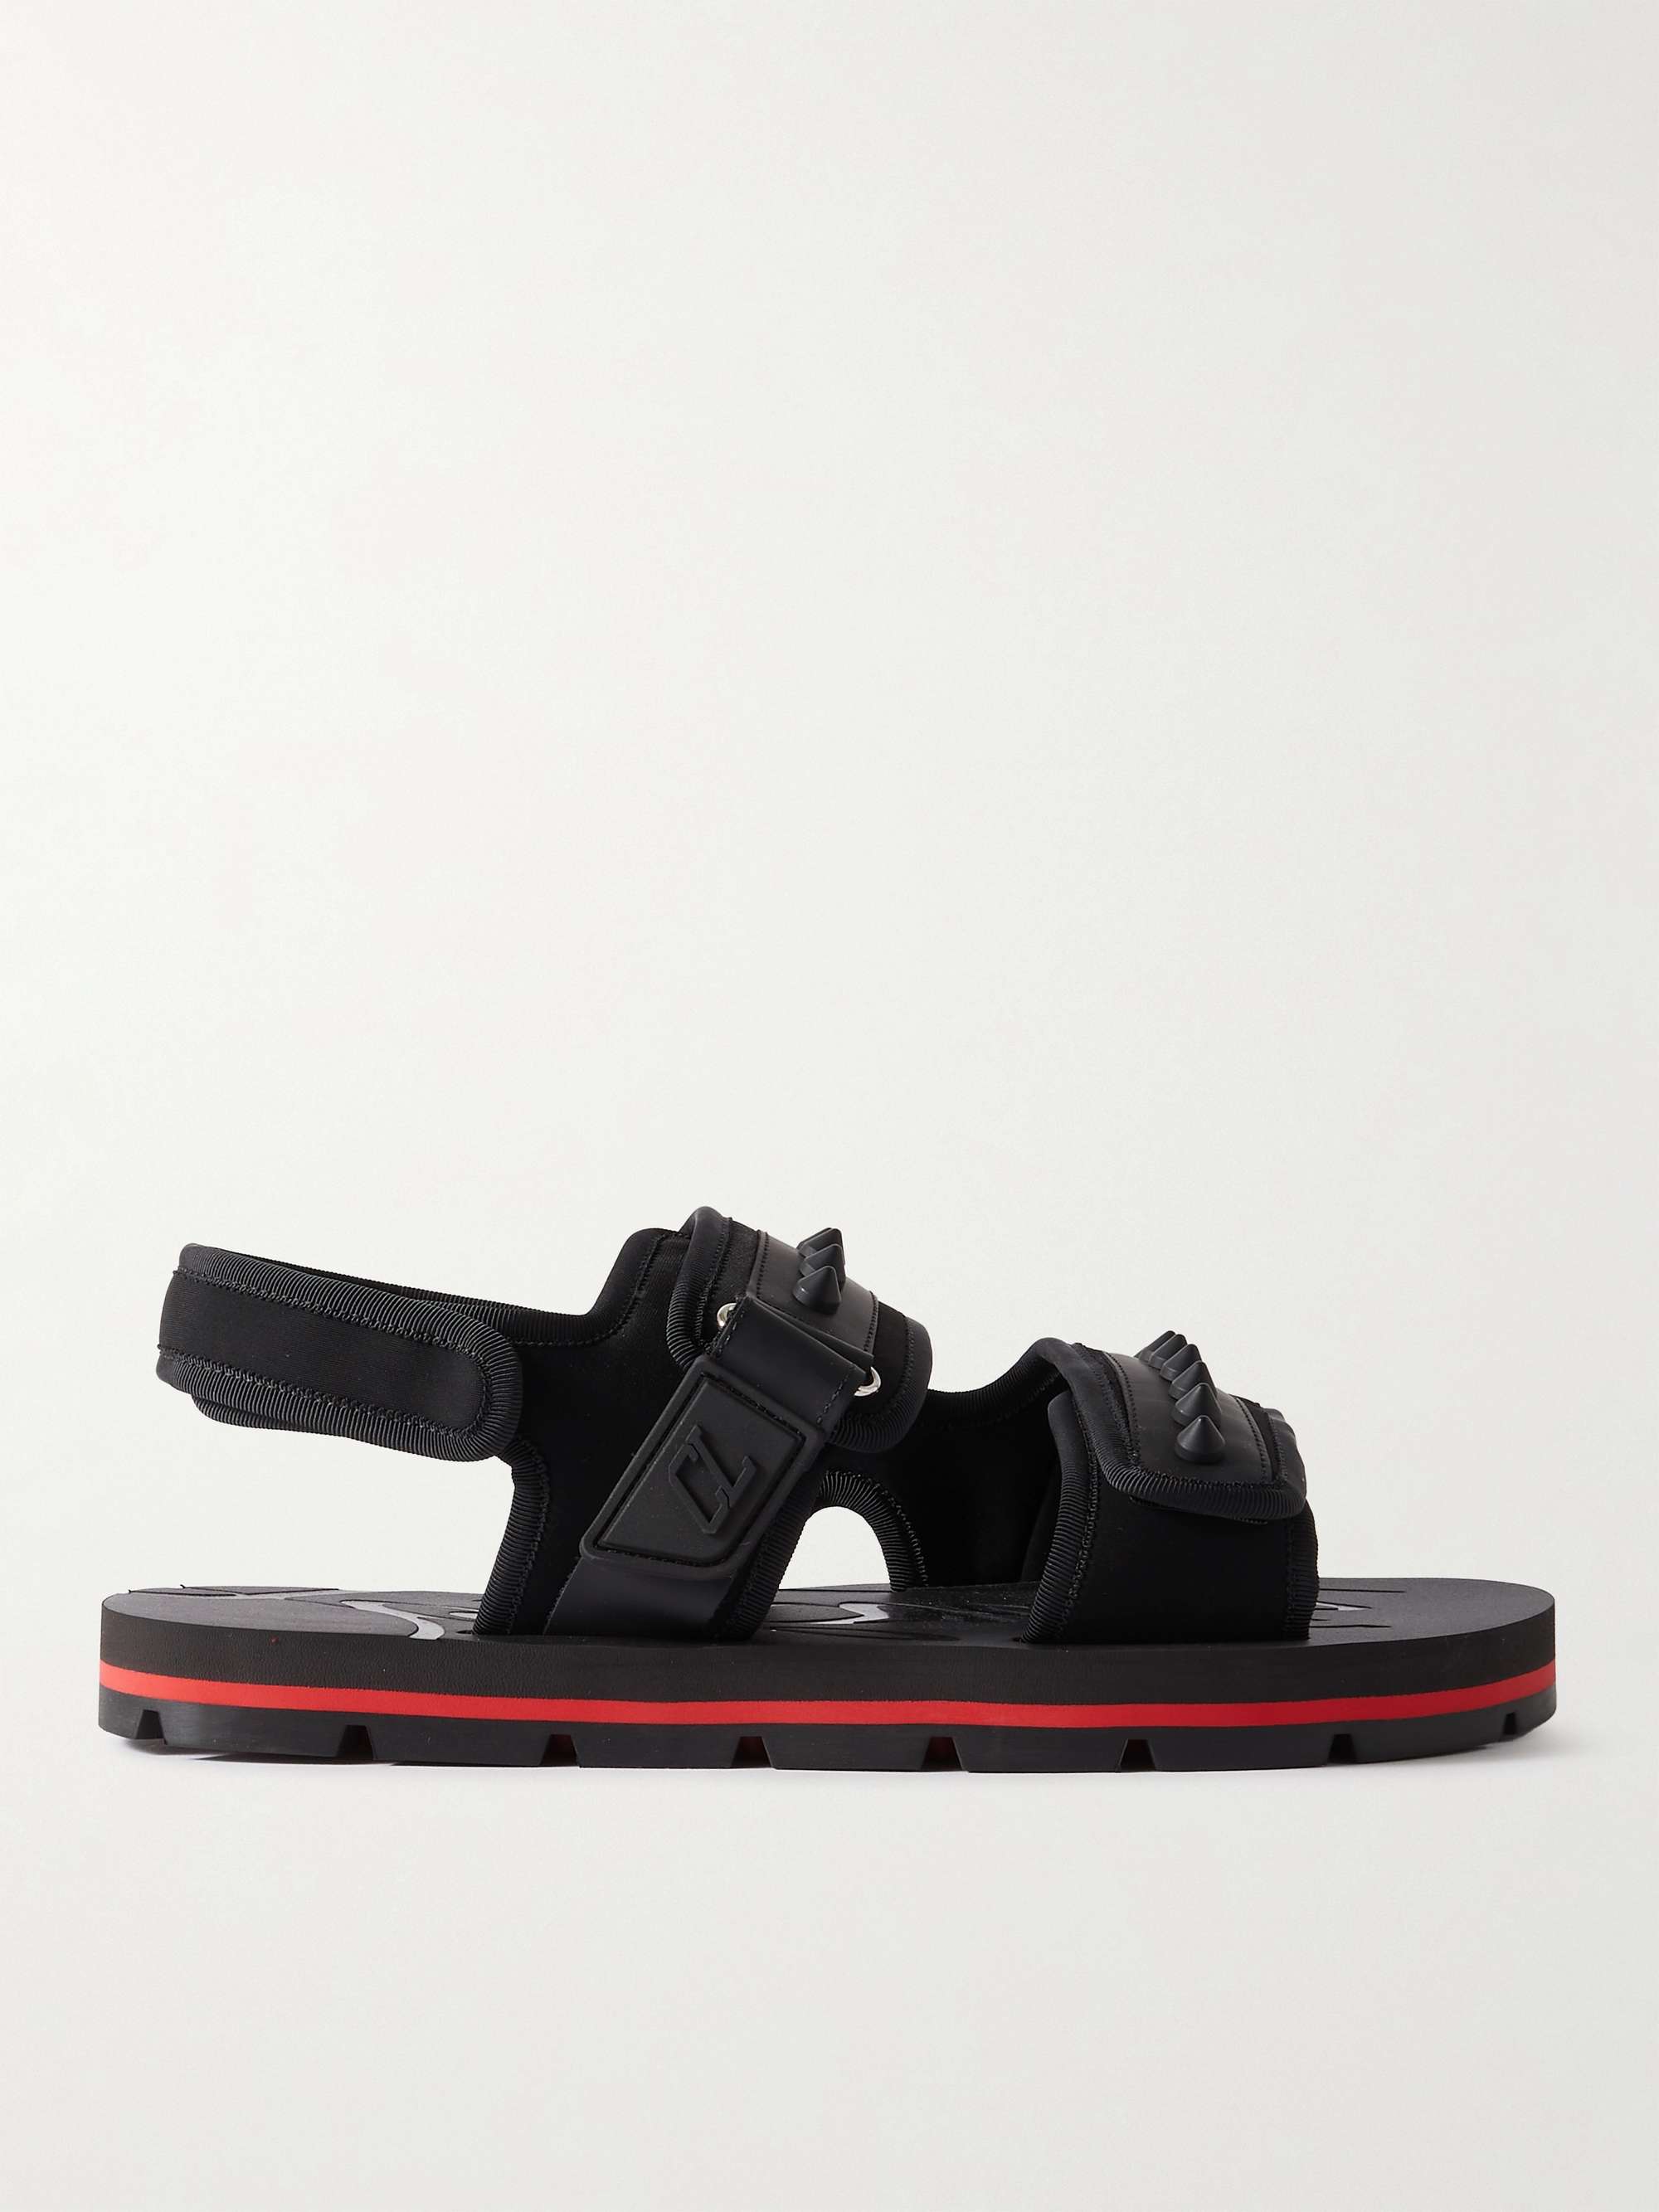 Christian Louboutin Siwa Studded Neoprene, Rubber and Leather Sandals - Men - Black Sandals - EU 40